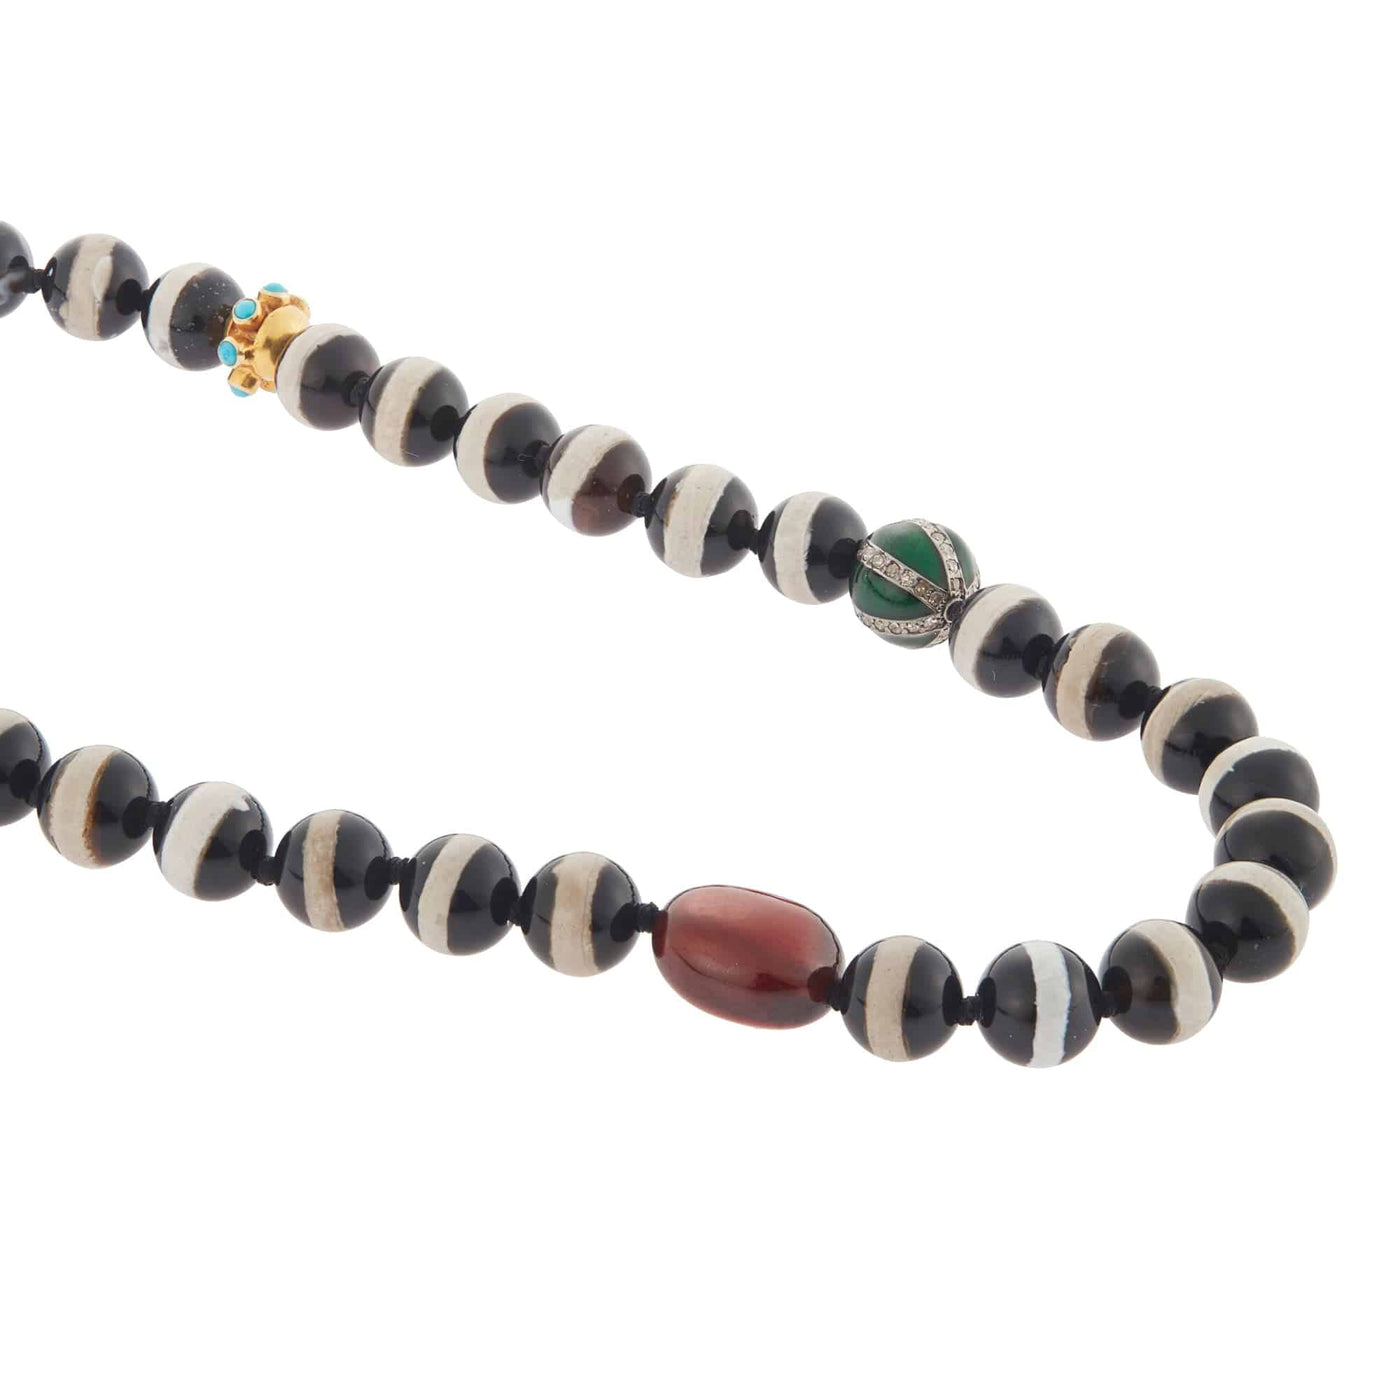 Black Agate Stripe Necklace 76 (45cm) - Globetrotter - Ileana Makri store